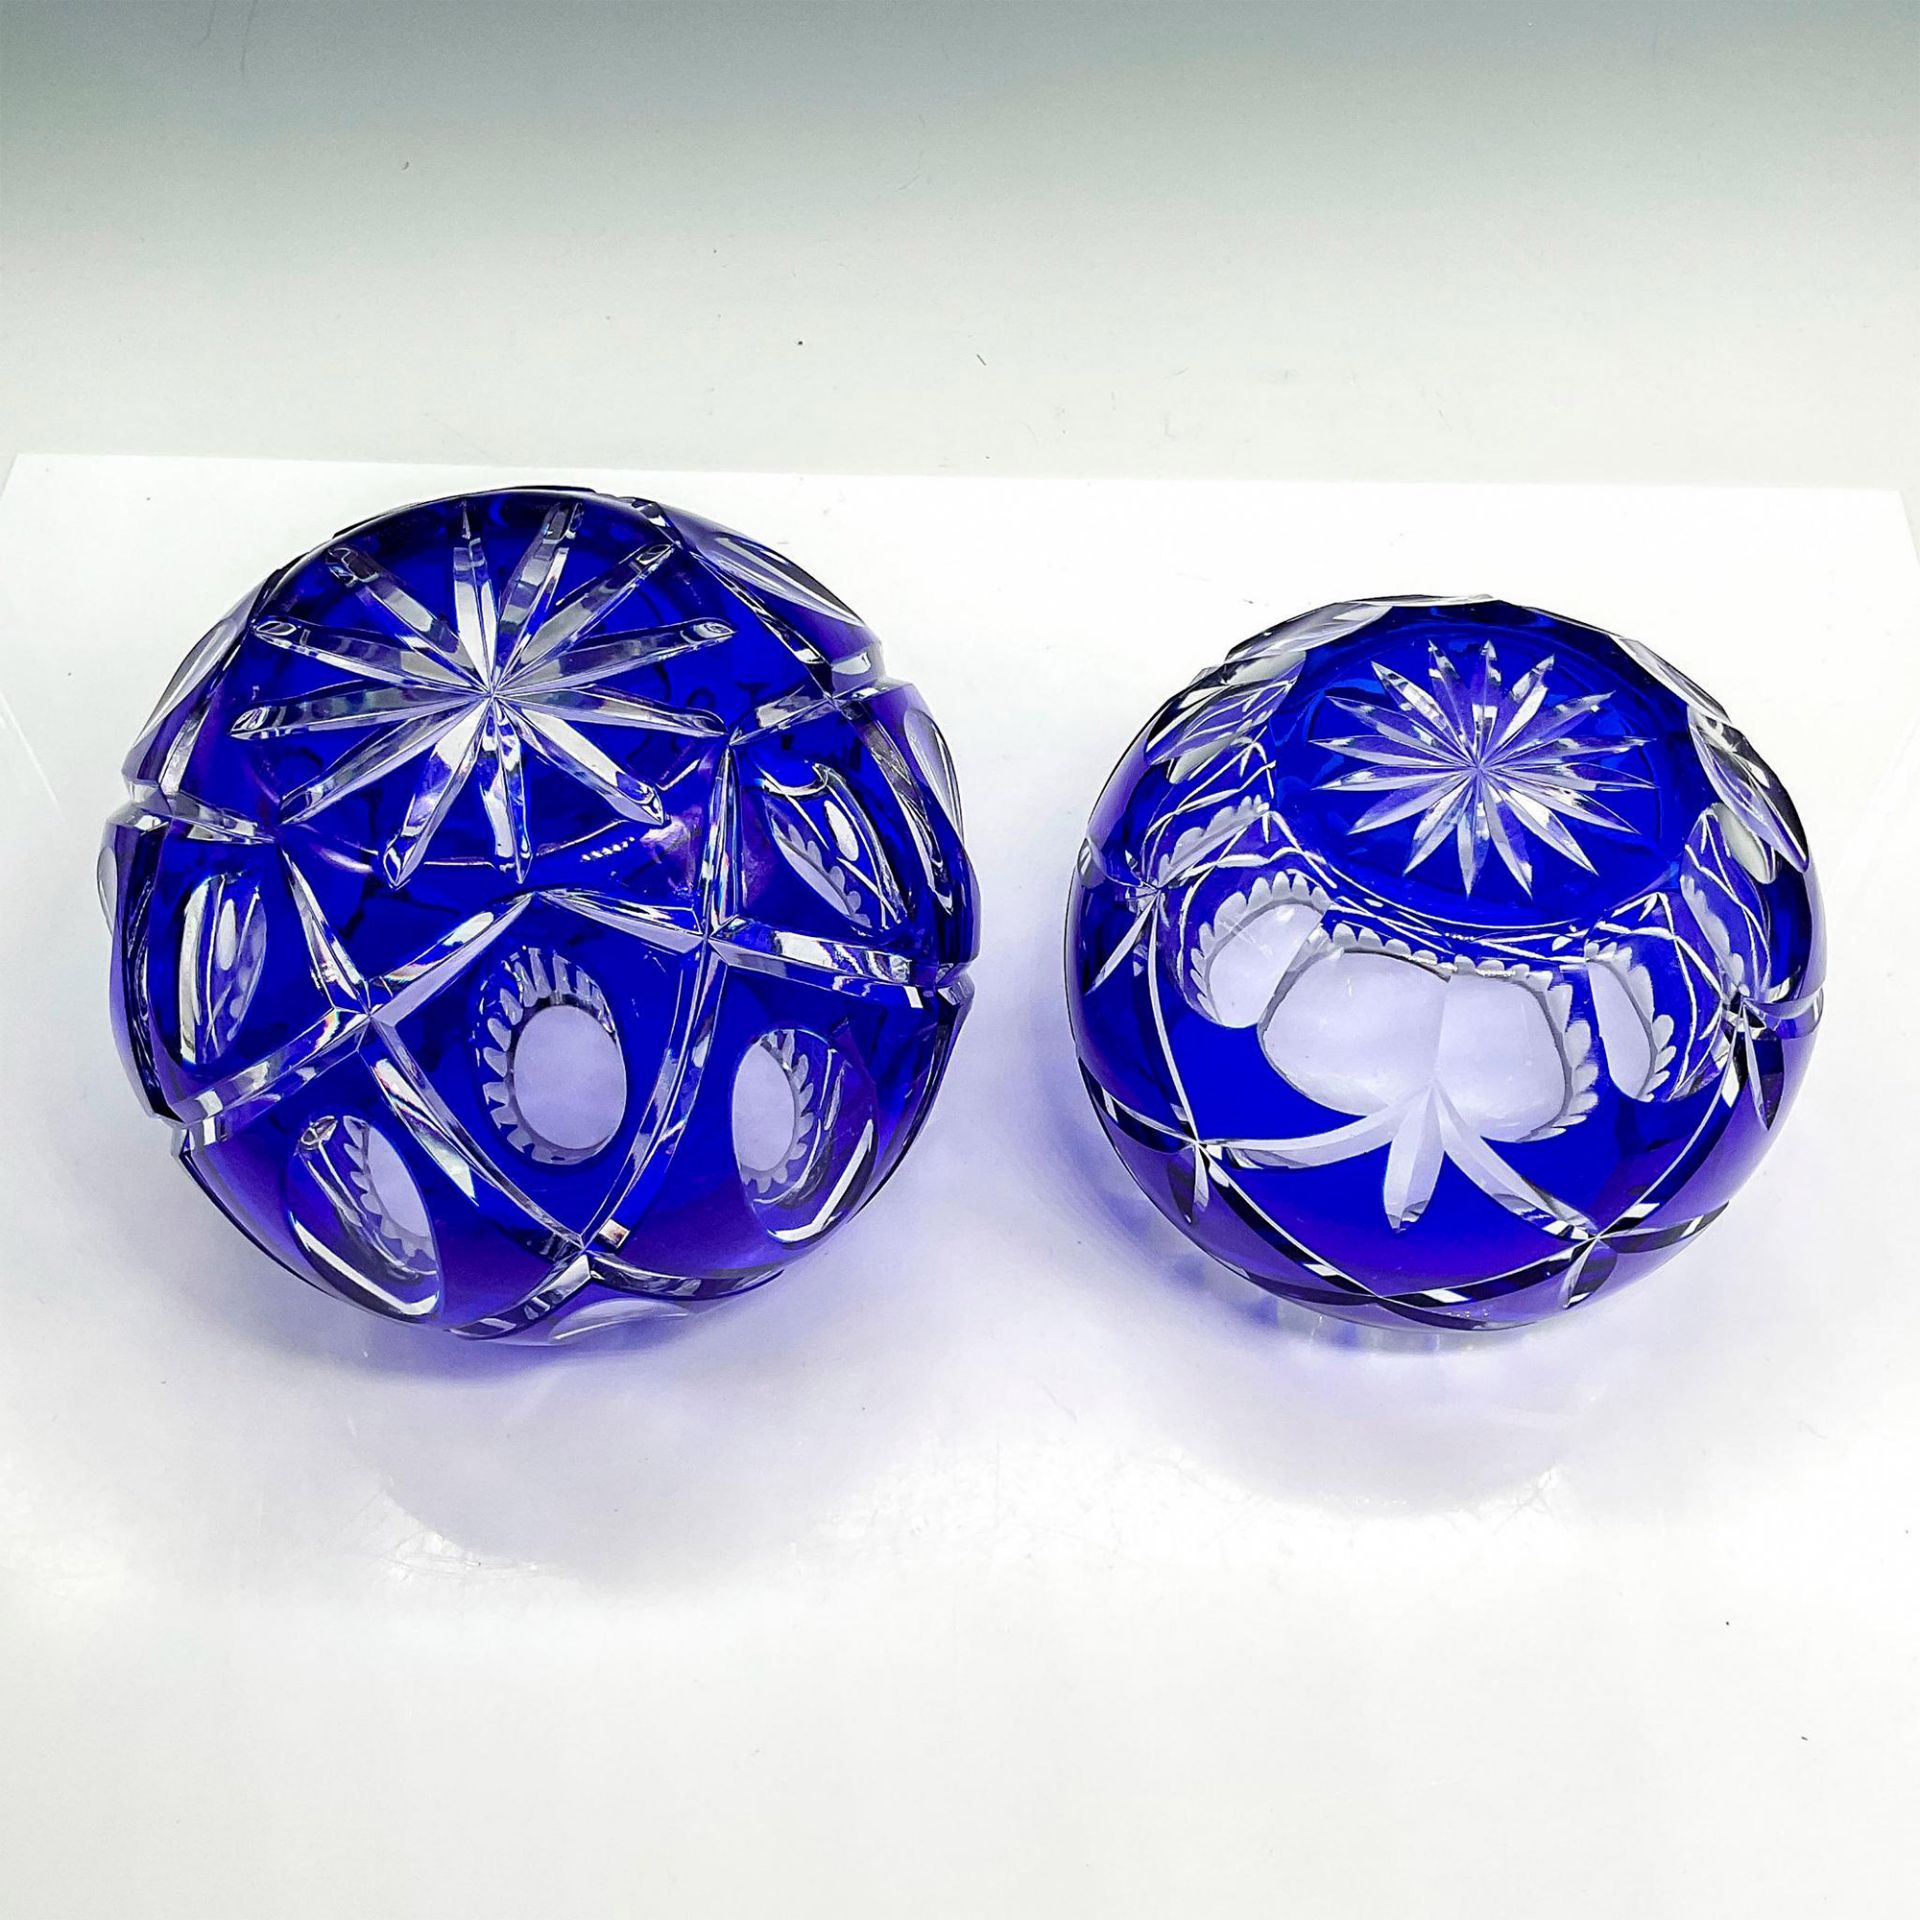 2pc Bohemian Crystal Decorative Bowls - Image 3 of 3